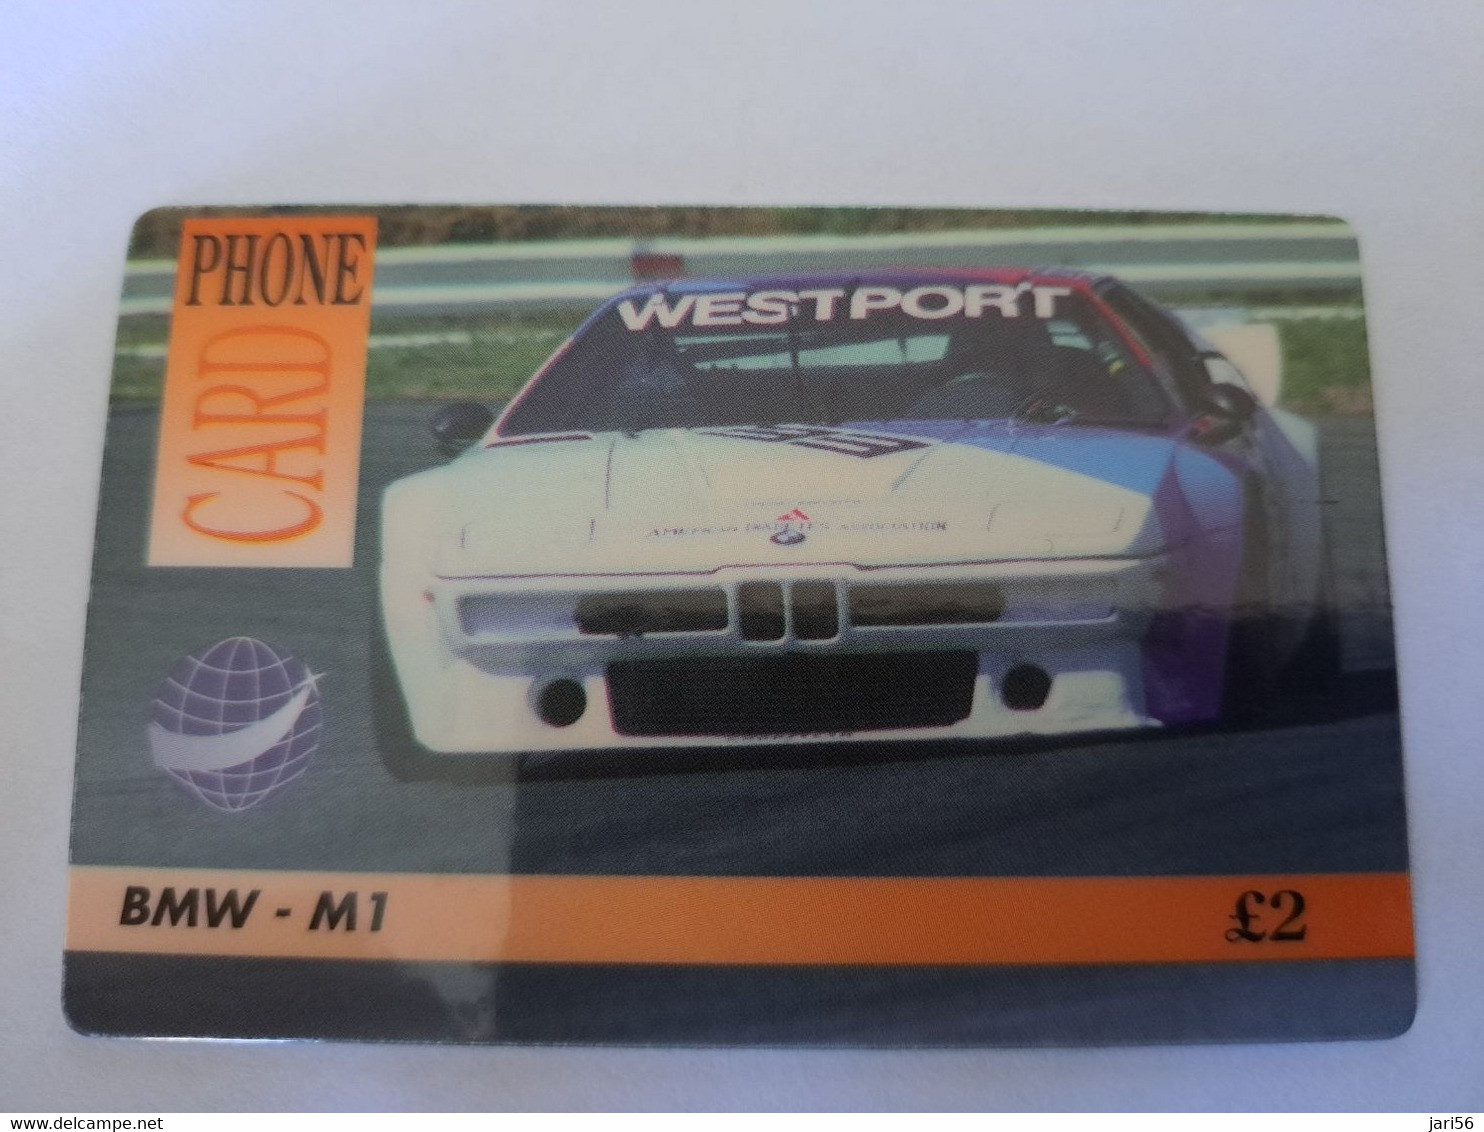 GREAT BRITAIN   2 POUND  /  BMW - M1  AUTO/CAR /RACE  /    DIT PHONECARD    PREPAID CARD      **12126** - [10] Colecciones